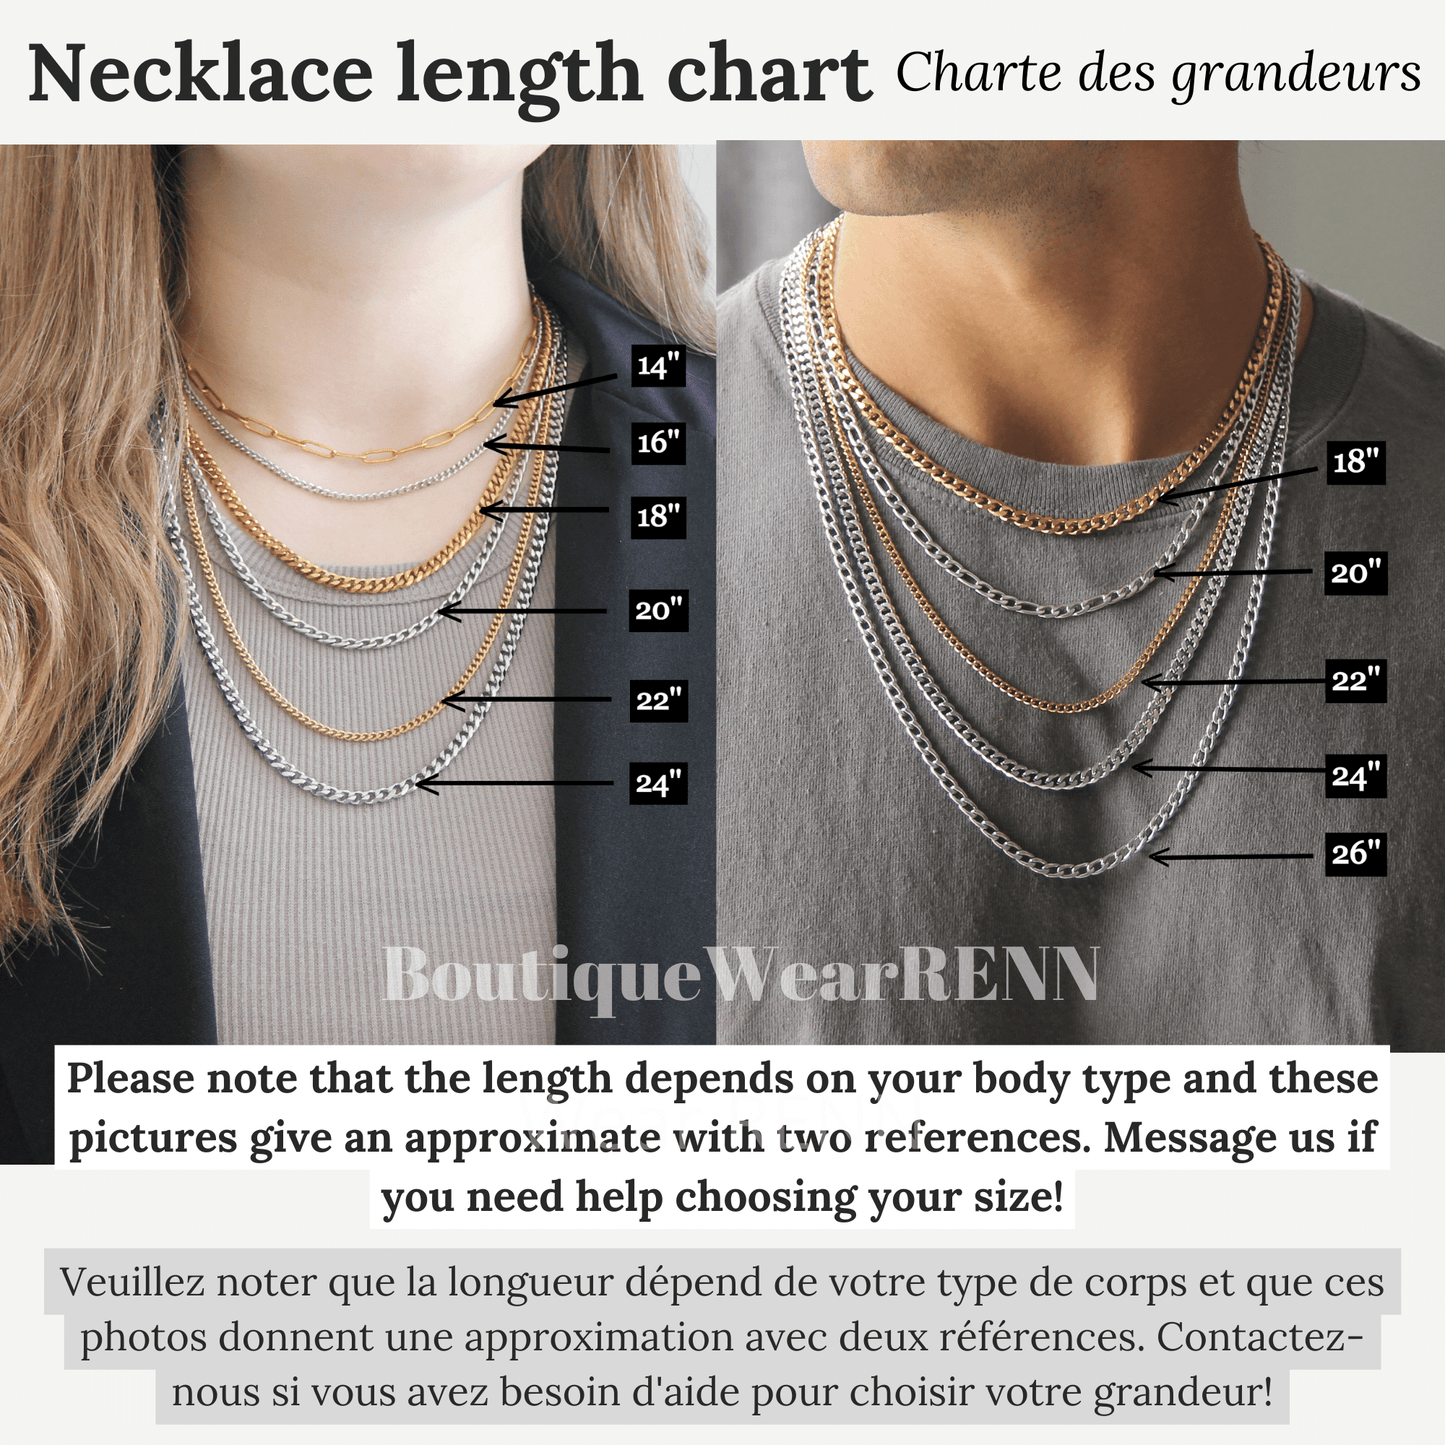 Necklace length chart - Boutique Wear RENN